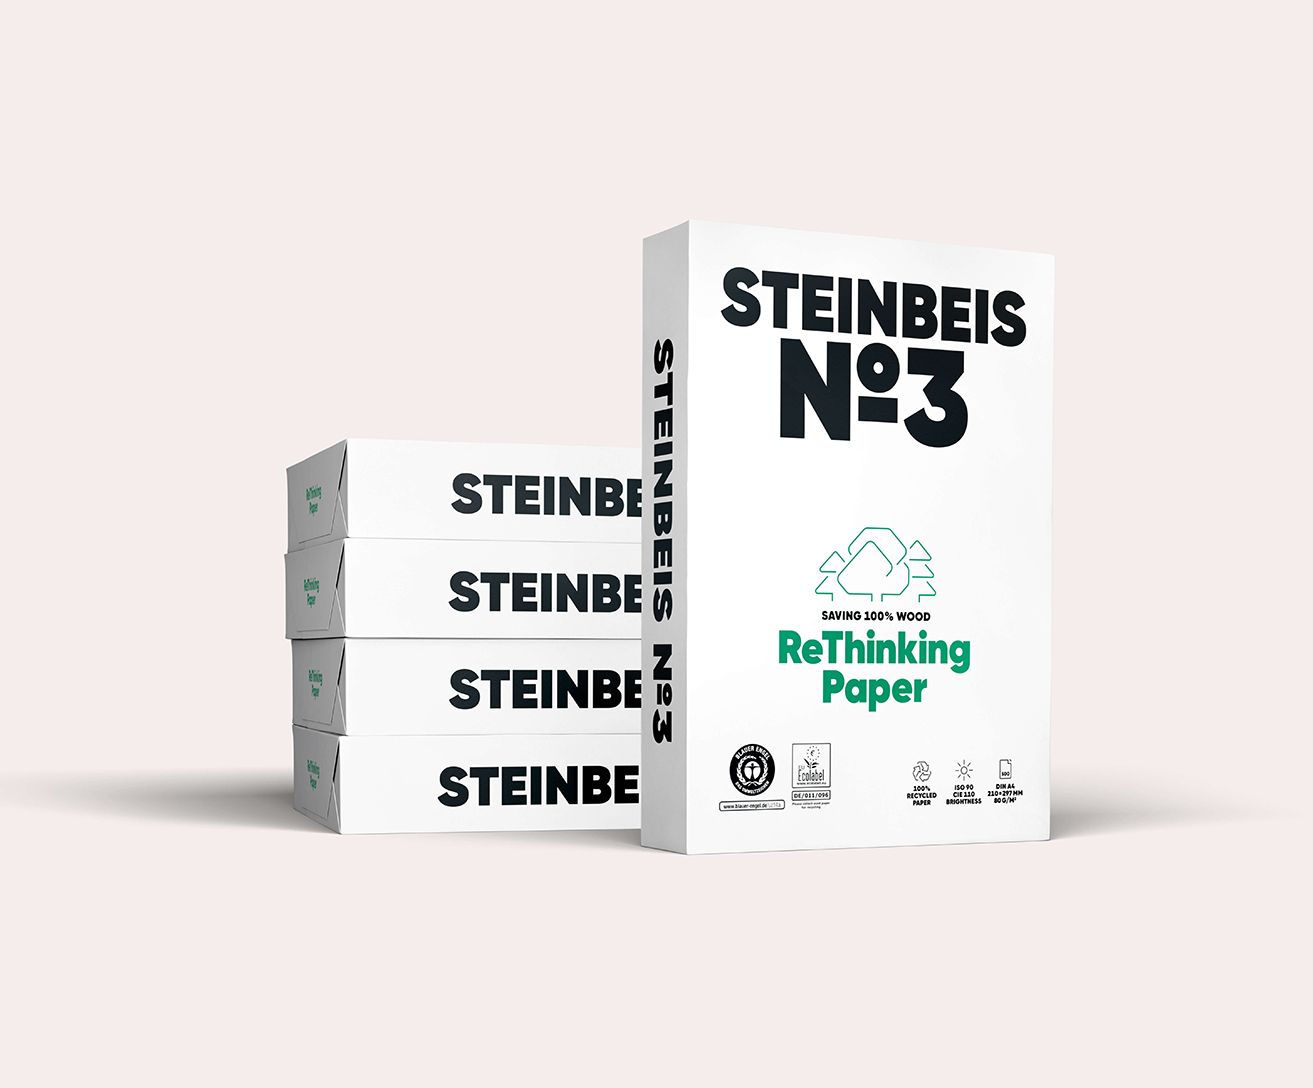 Steinbeis №3